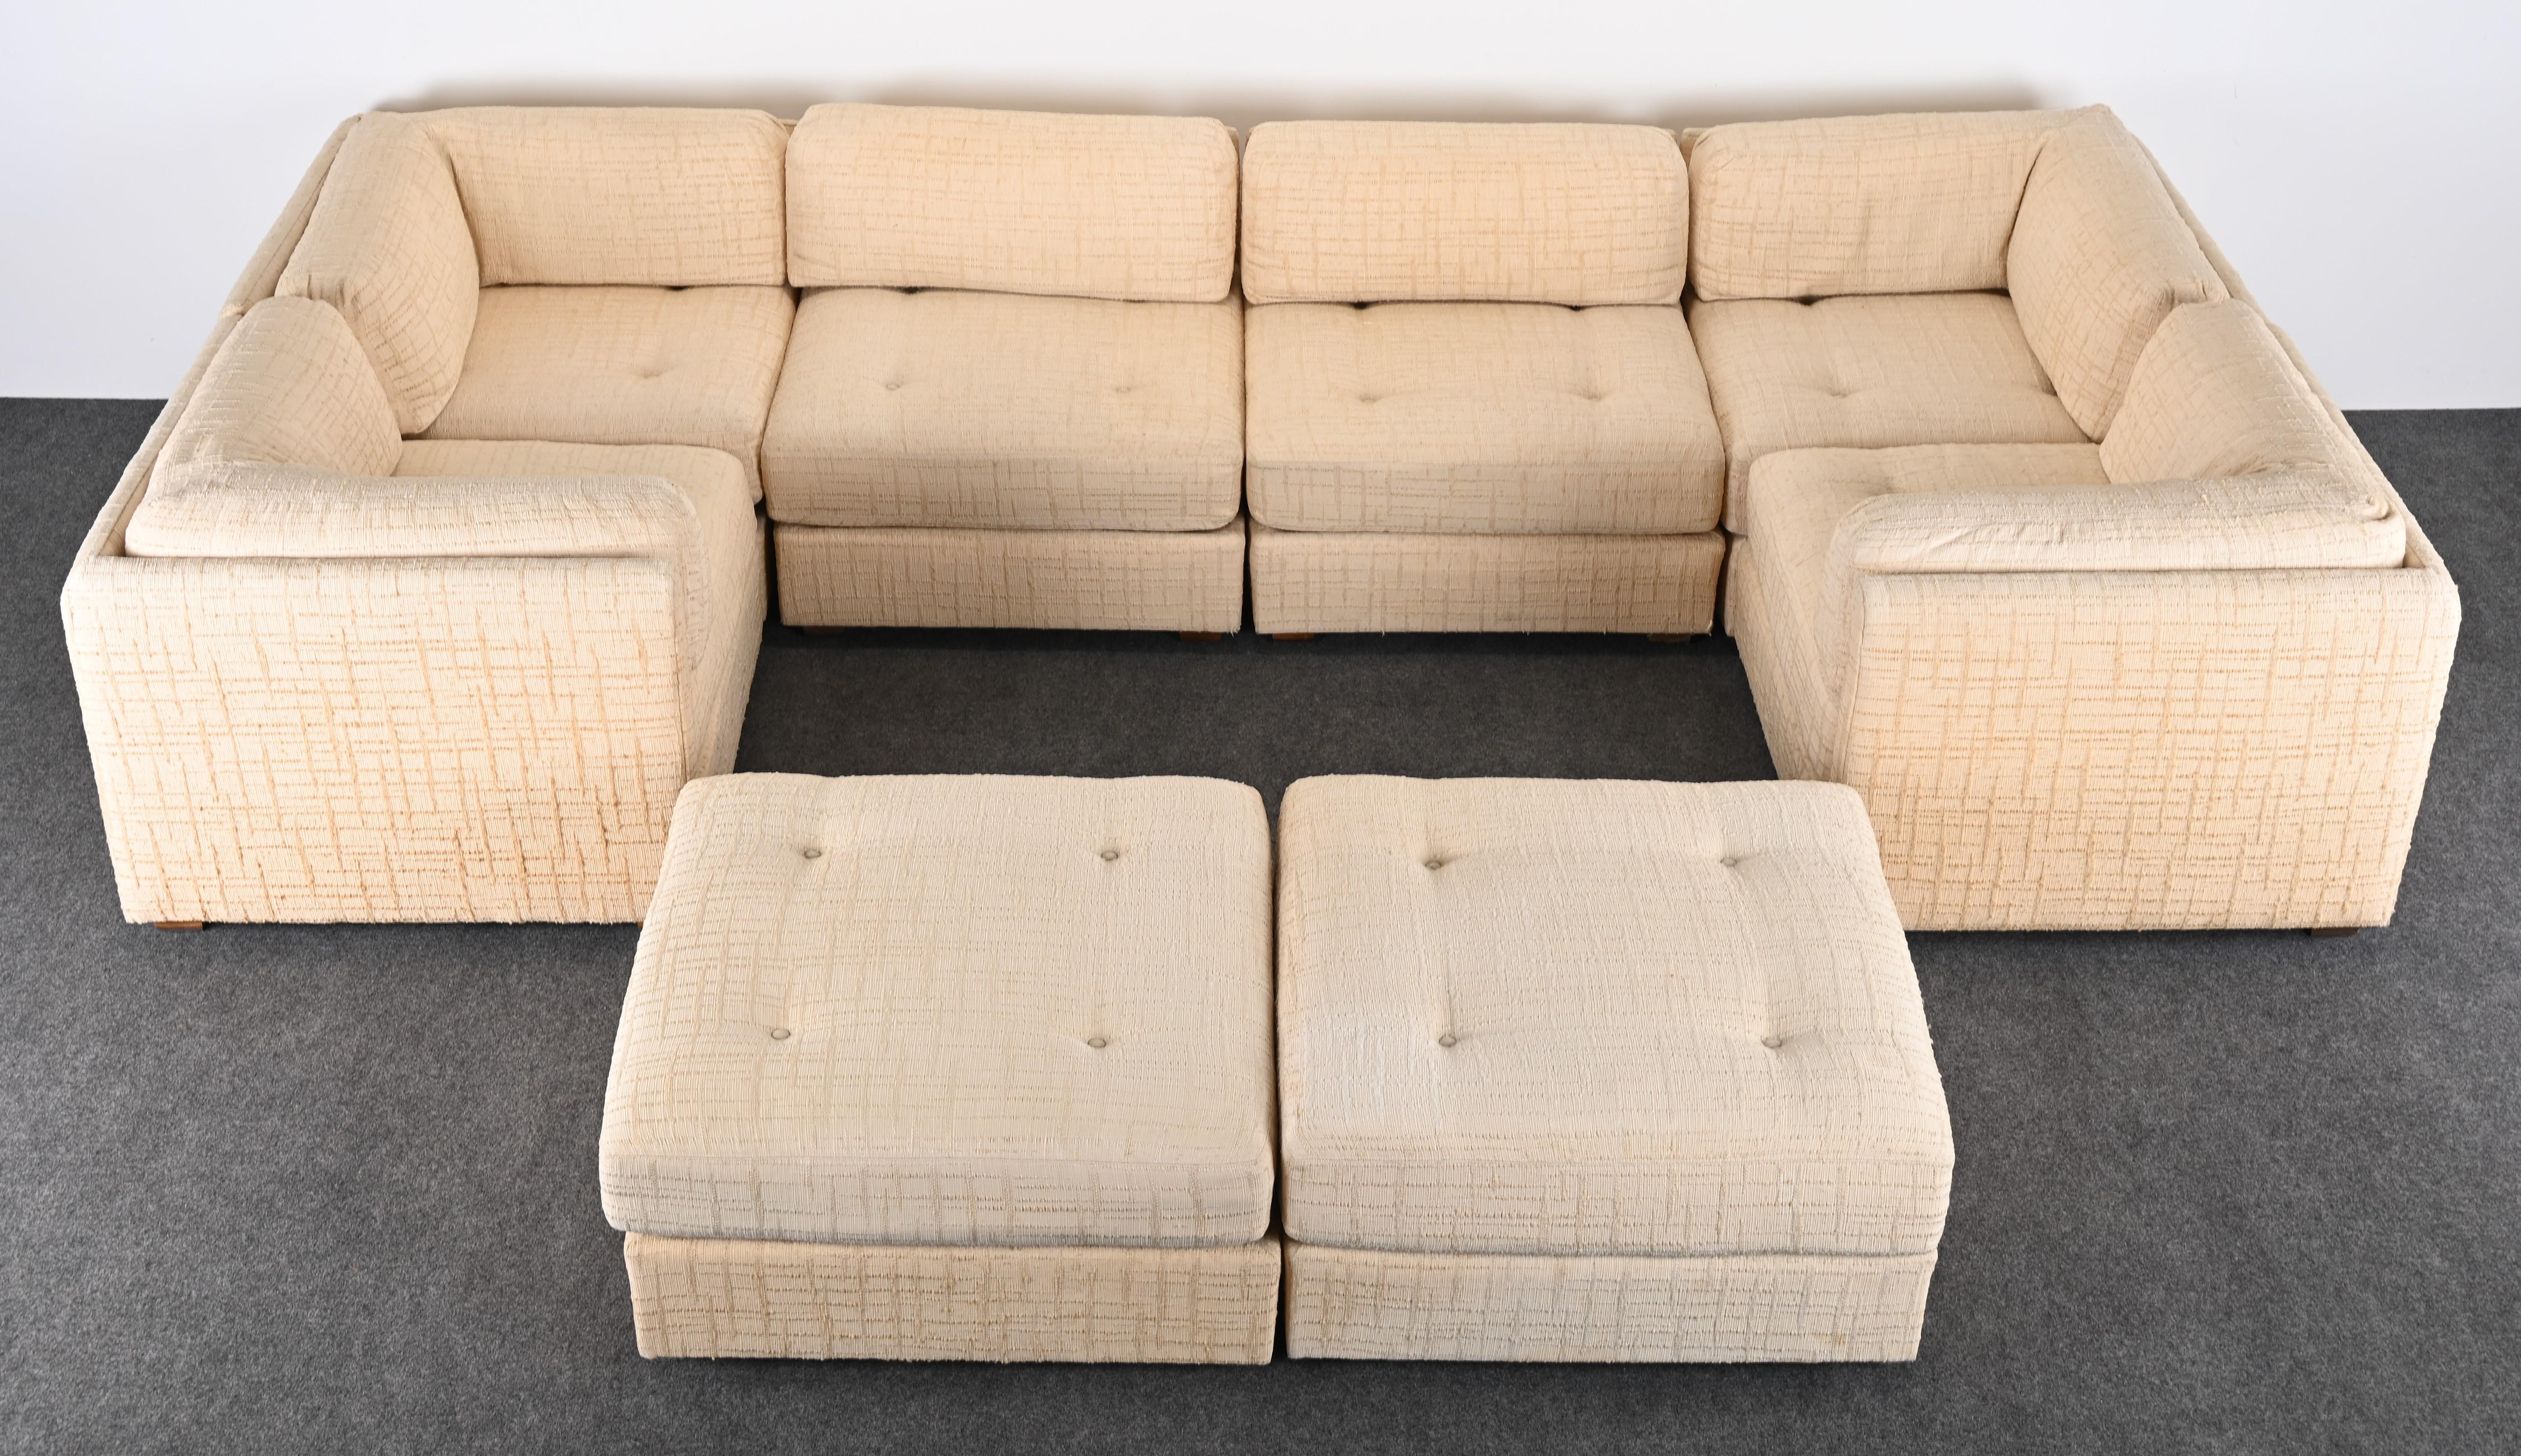 70s sectional sofa